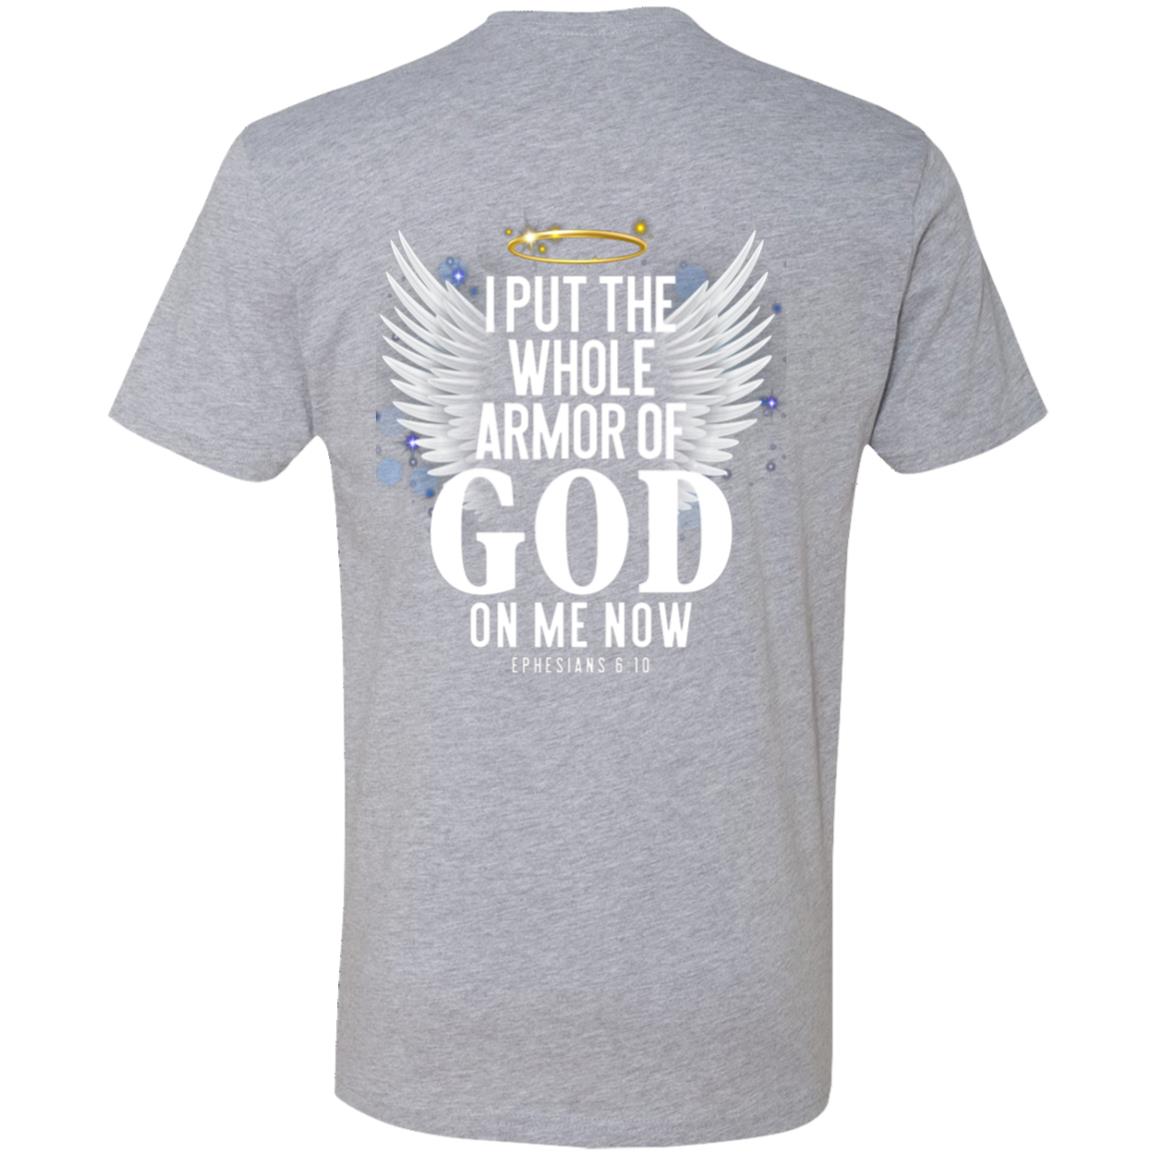 Armor of God T-shirt